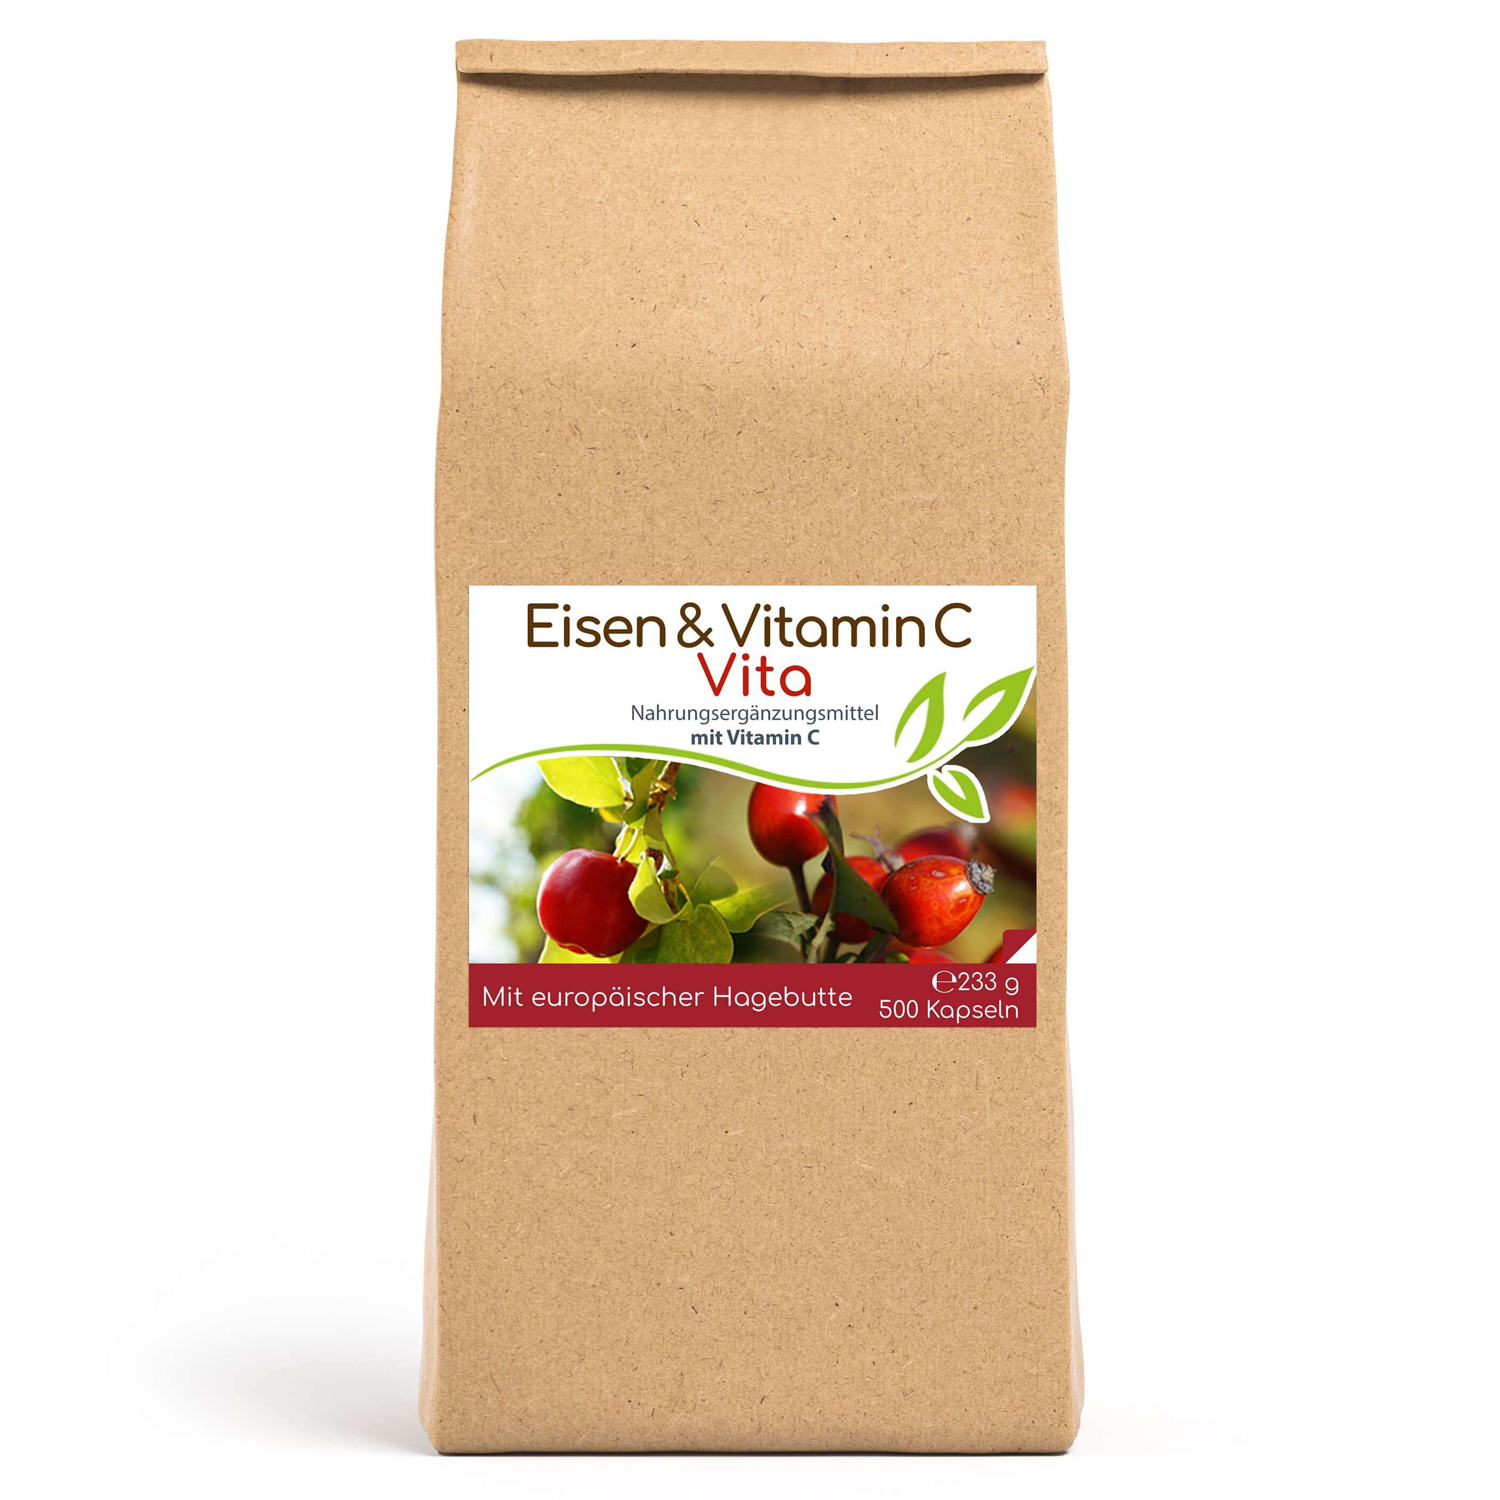 Eisen & Vitamin C Vita Vorratsbeutel von Cellavita - 500 Kapseln